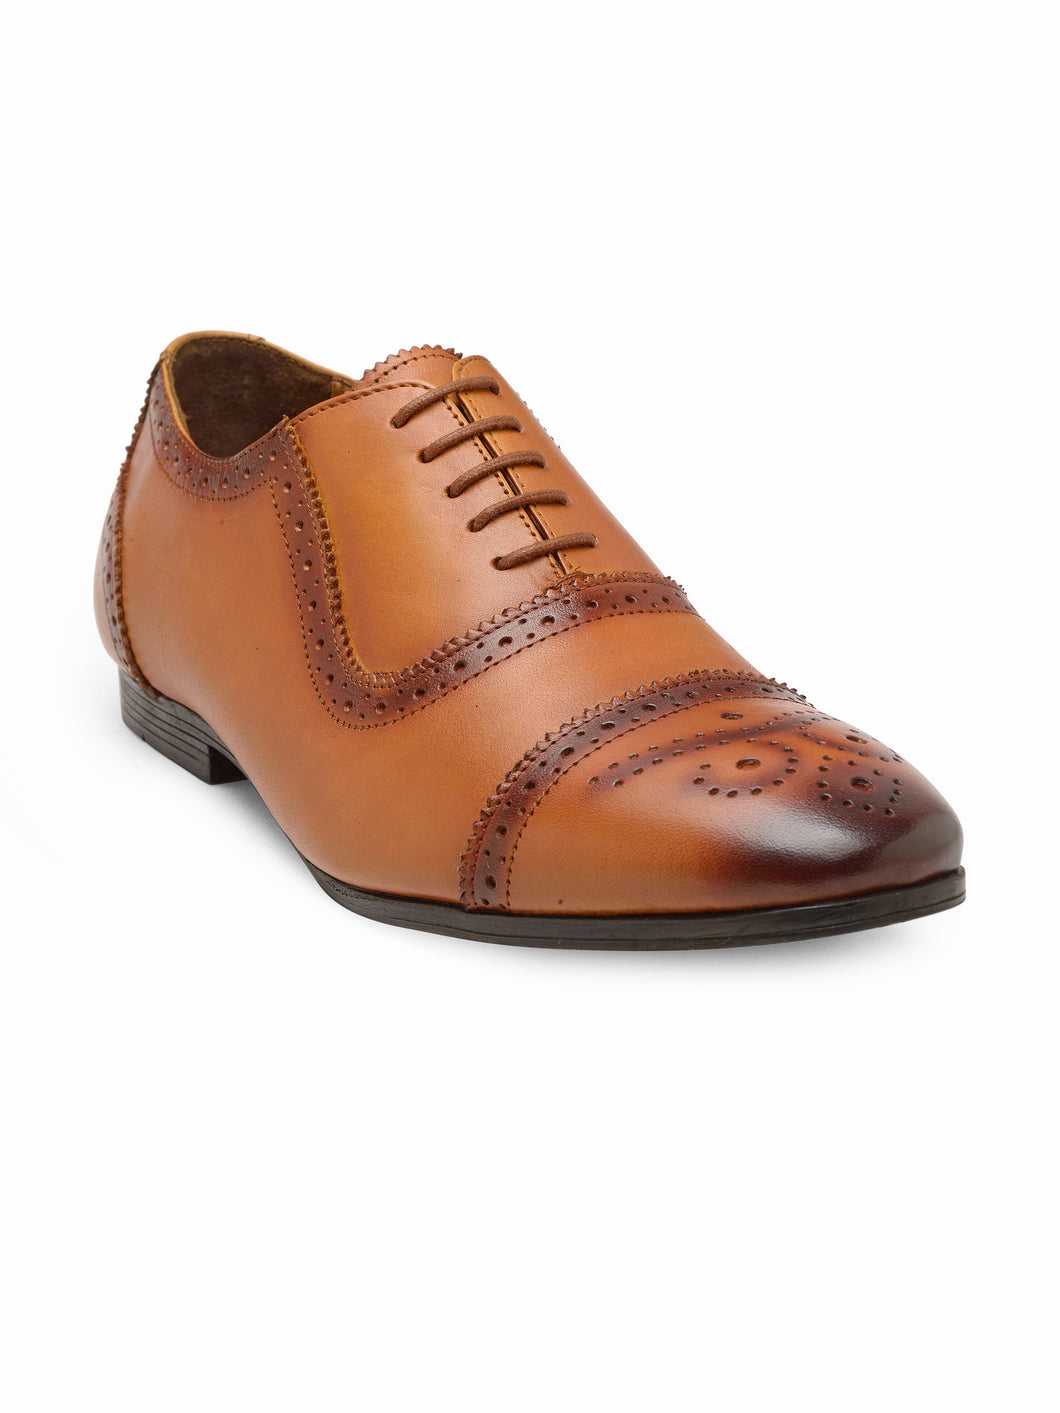 Teakwood Genuine Leathers Men Tan  Formal Oxfords Shoes